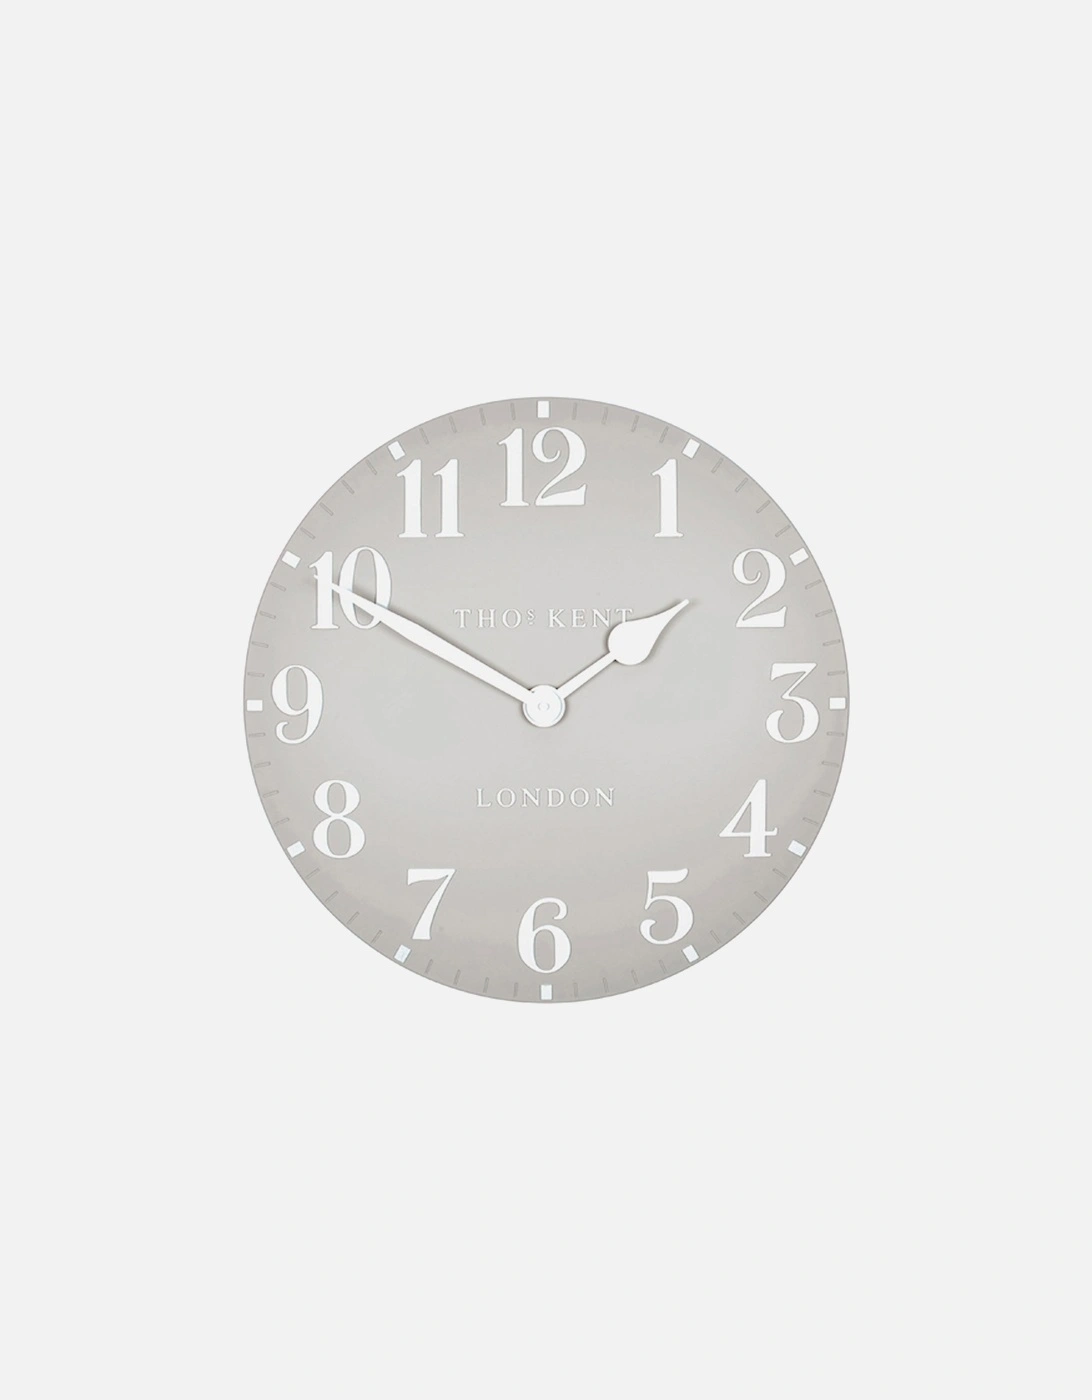 20" Arabic Wall Clock Dove Grey